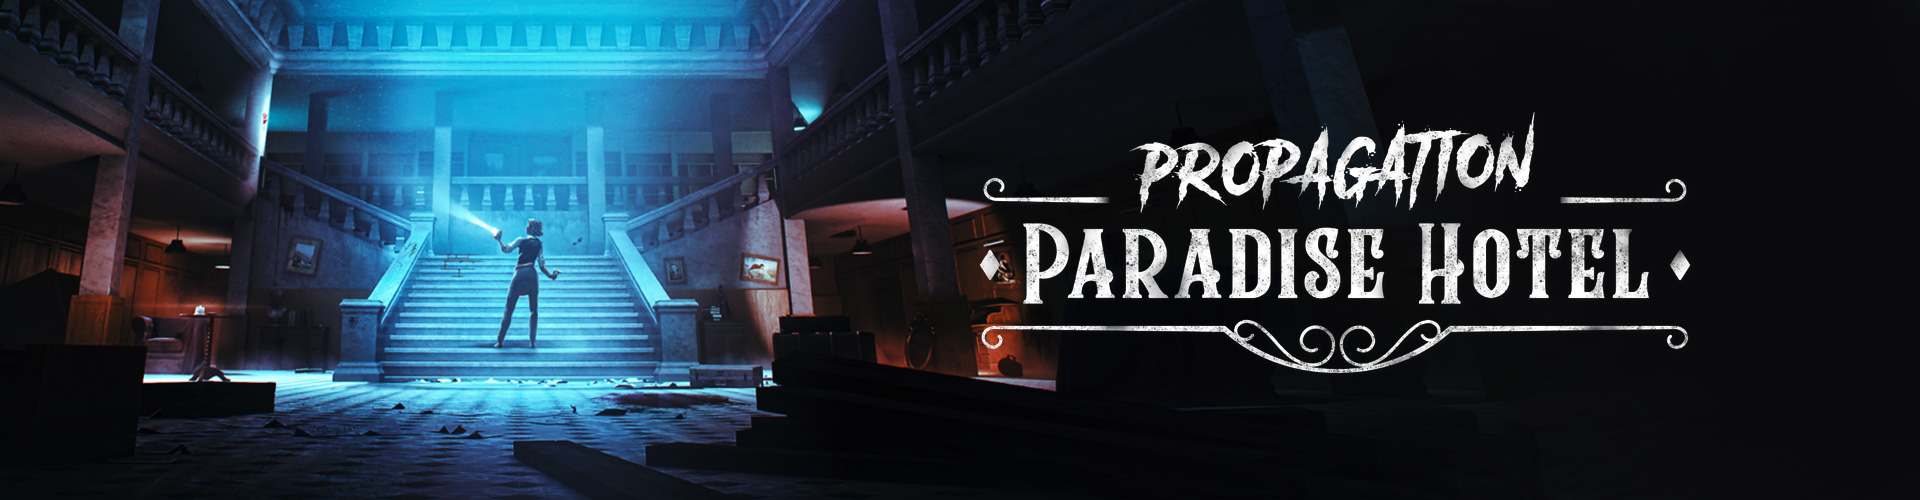 Propagation Paradise Hotel: Ein psychologisches Horror-Spiel in Virtual Reality (VR)